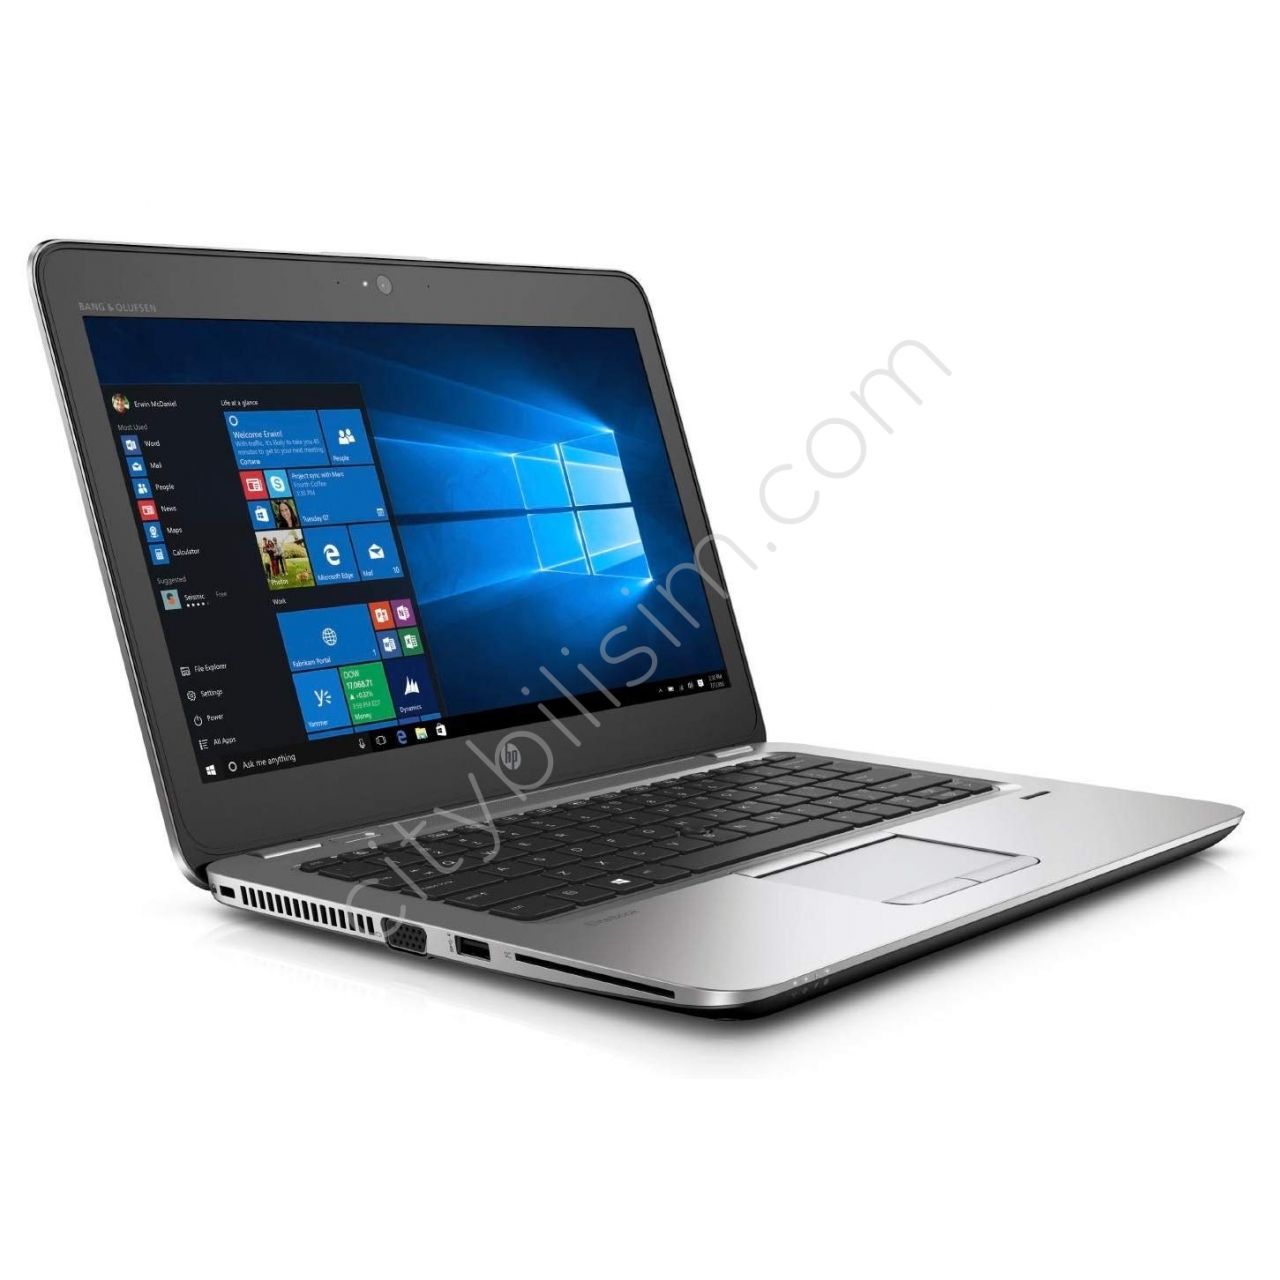 HP Elitebook 820 G4 İ5 7200U 8GB 256 GB M.2  SSD 12.5" Notebook